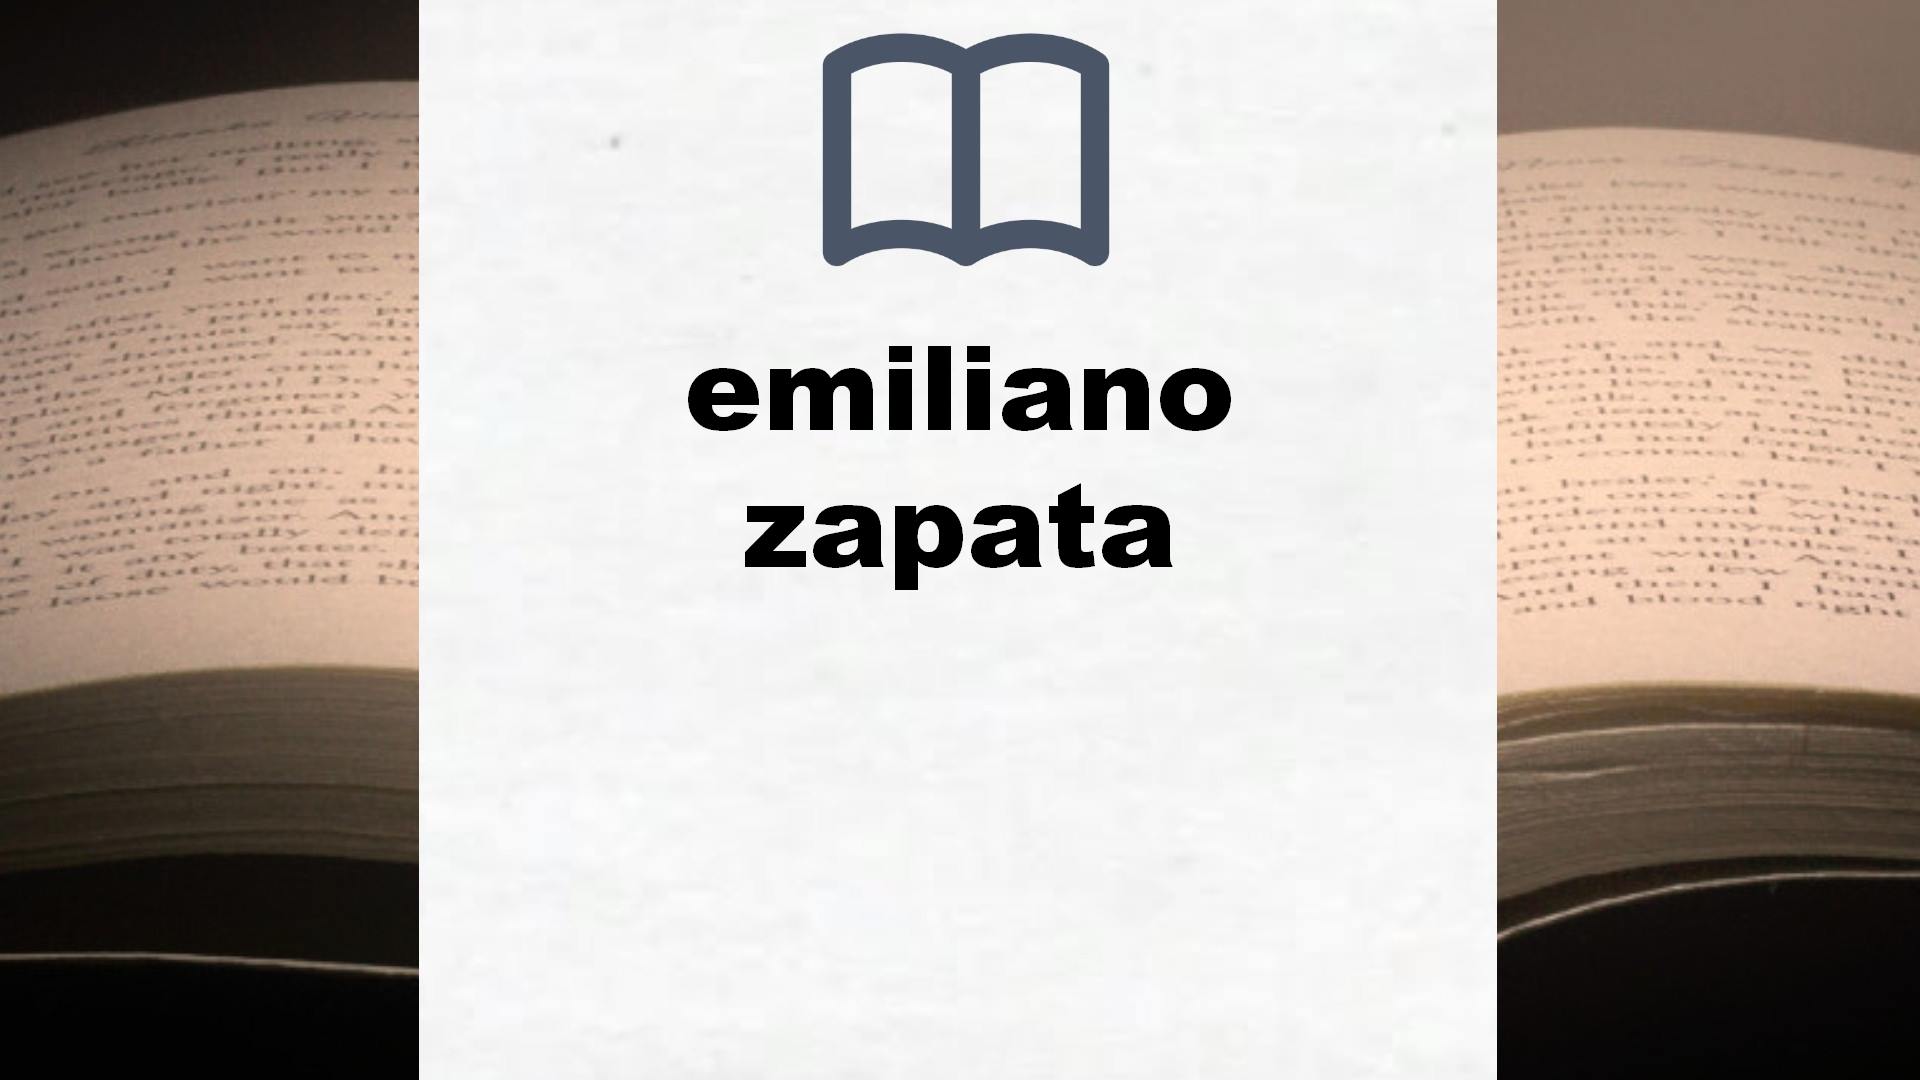 Libros sobre emiliano zapata